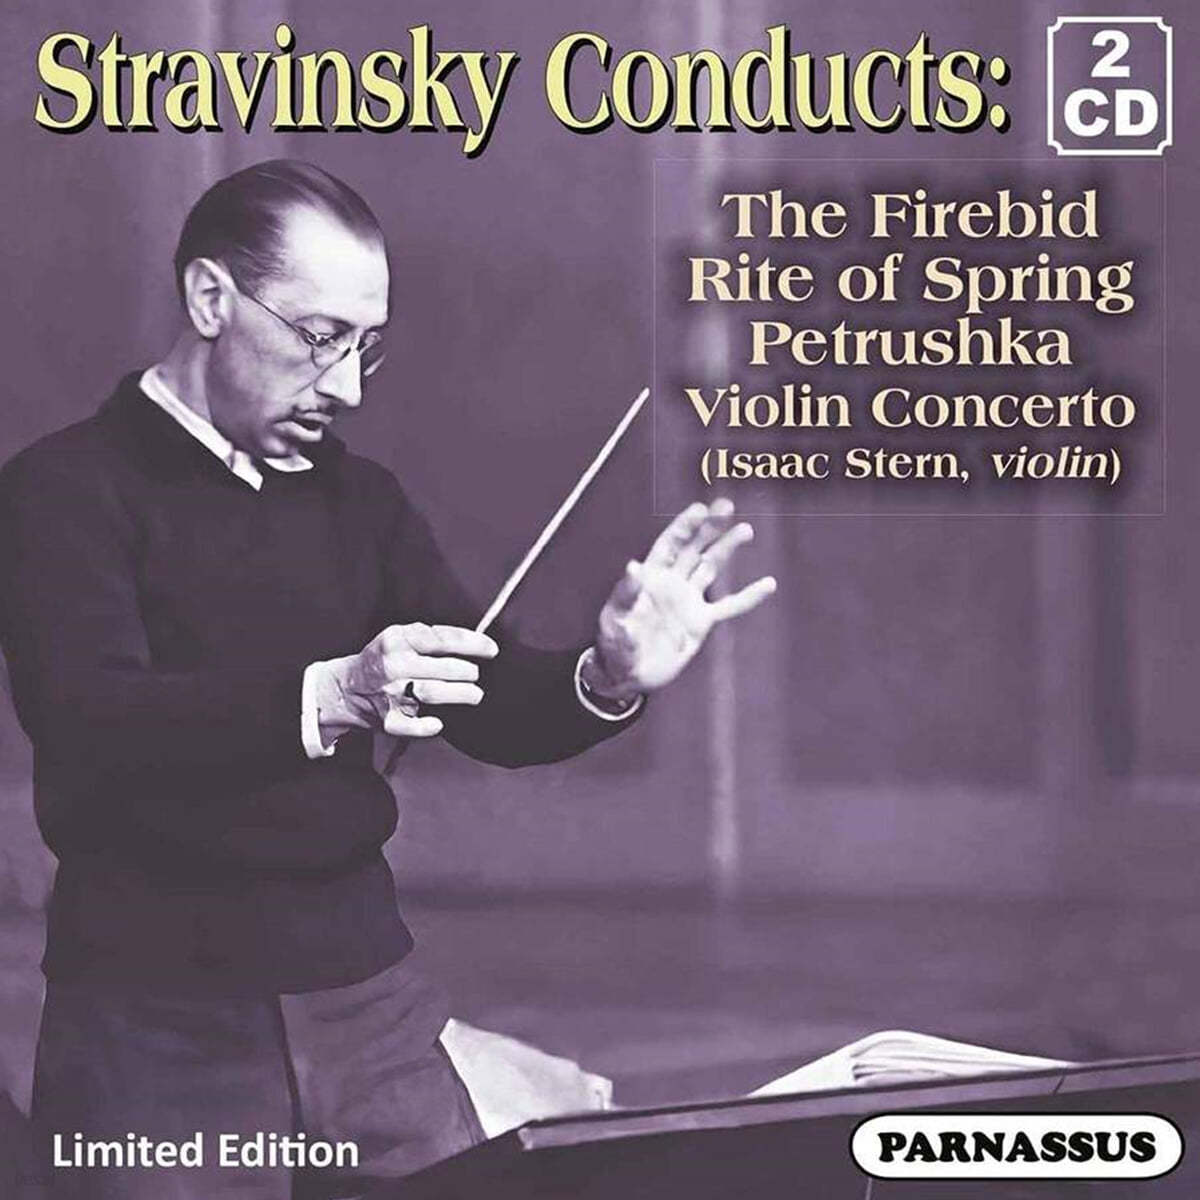 Columbia Symphony 스트라빈스키가 지휘하는 스트라빈스키 (Stravinsky Conducts Stravinsky) 